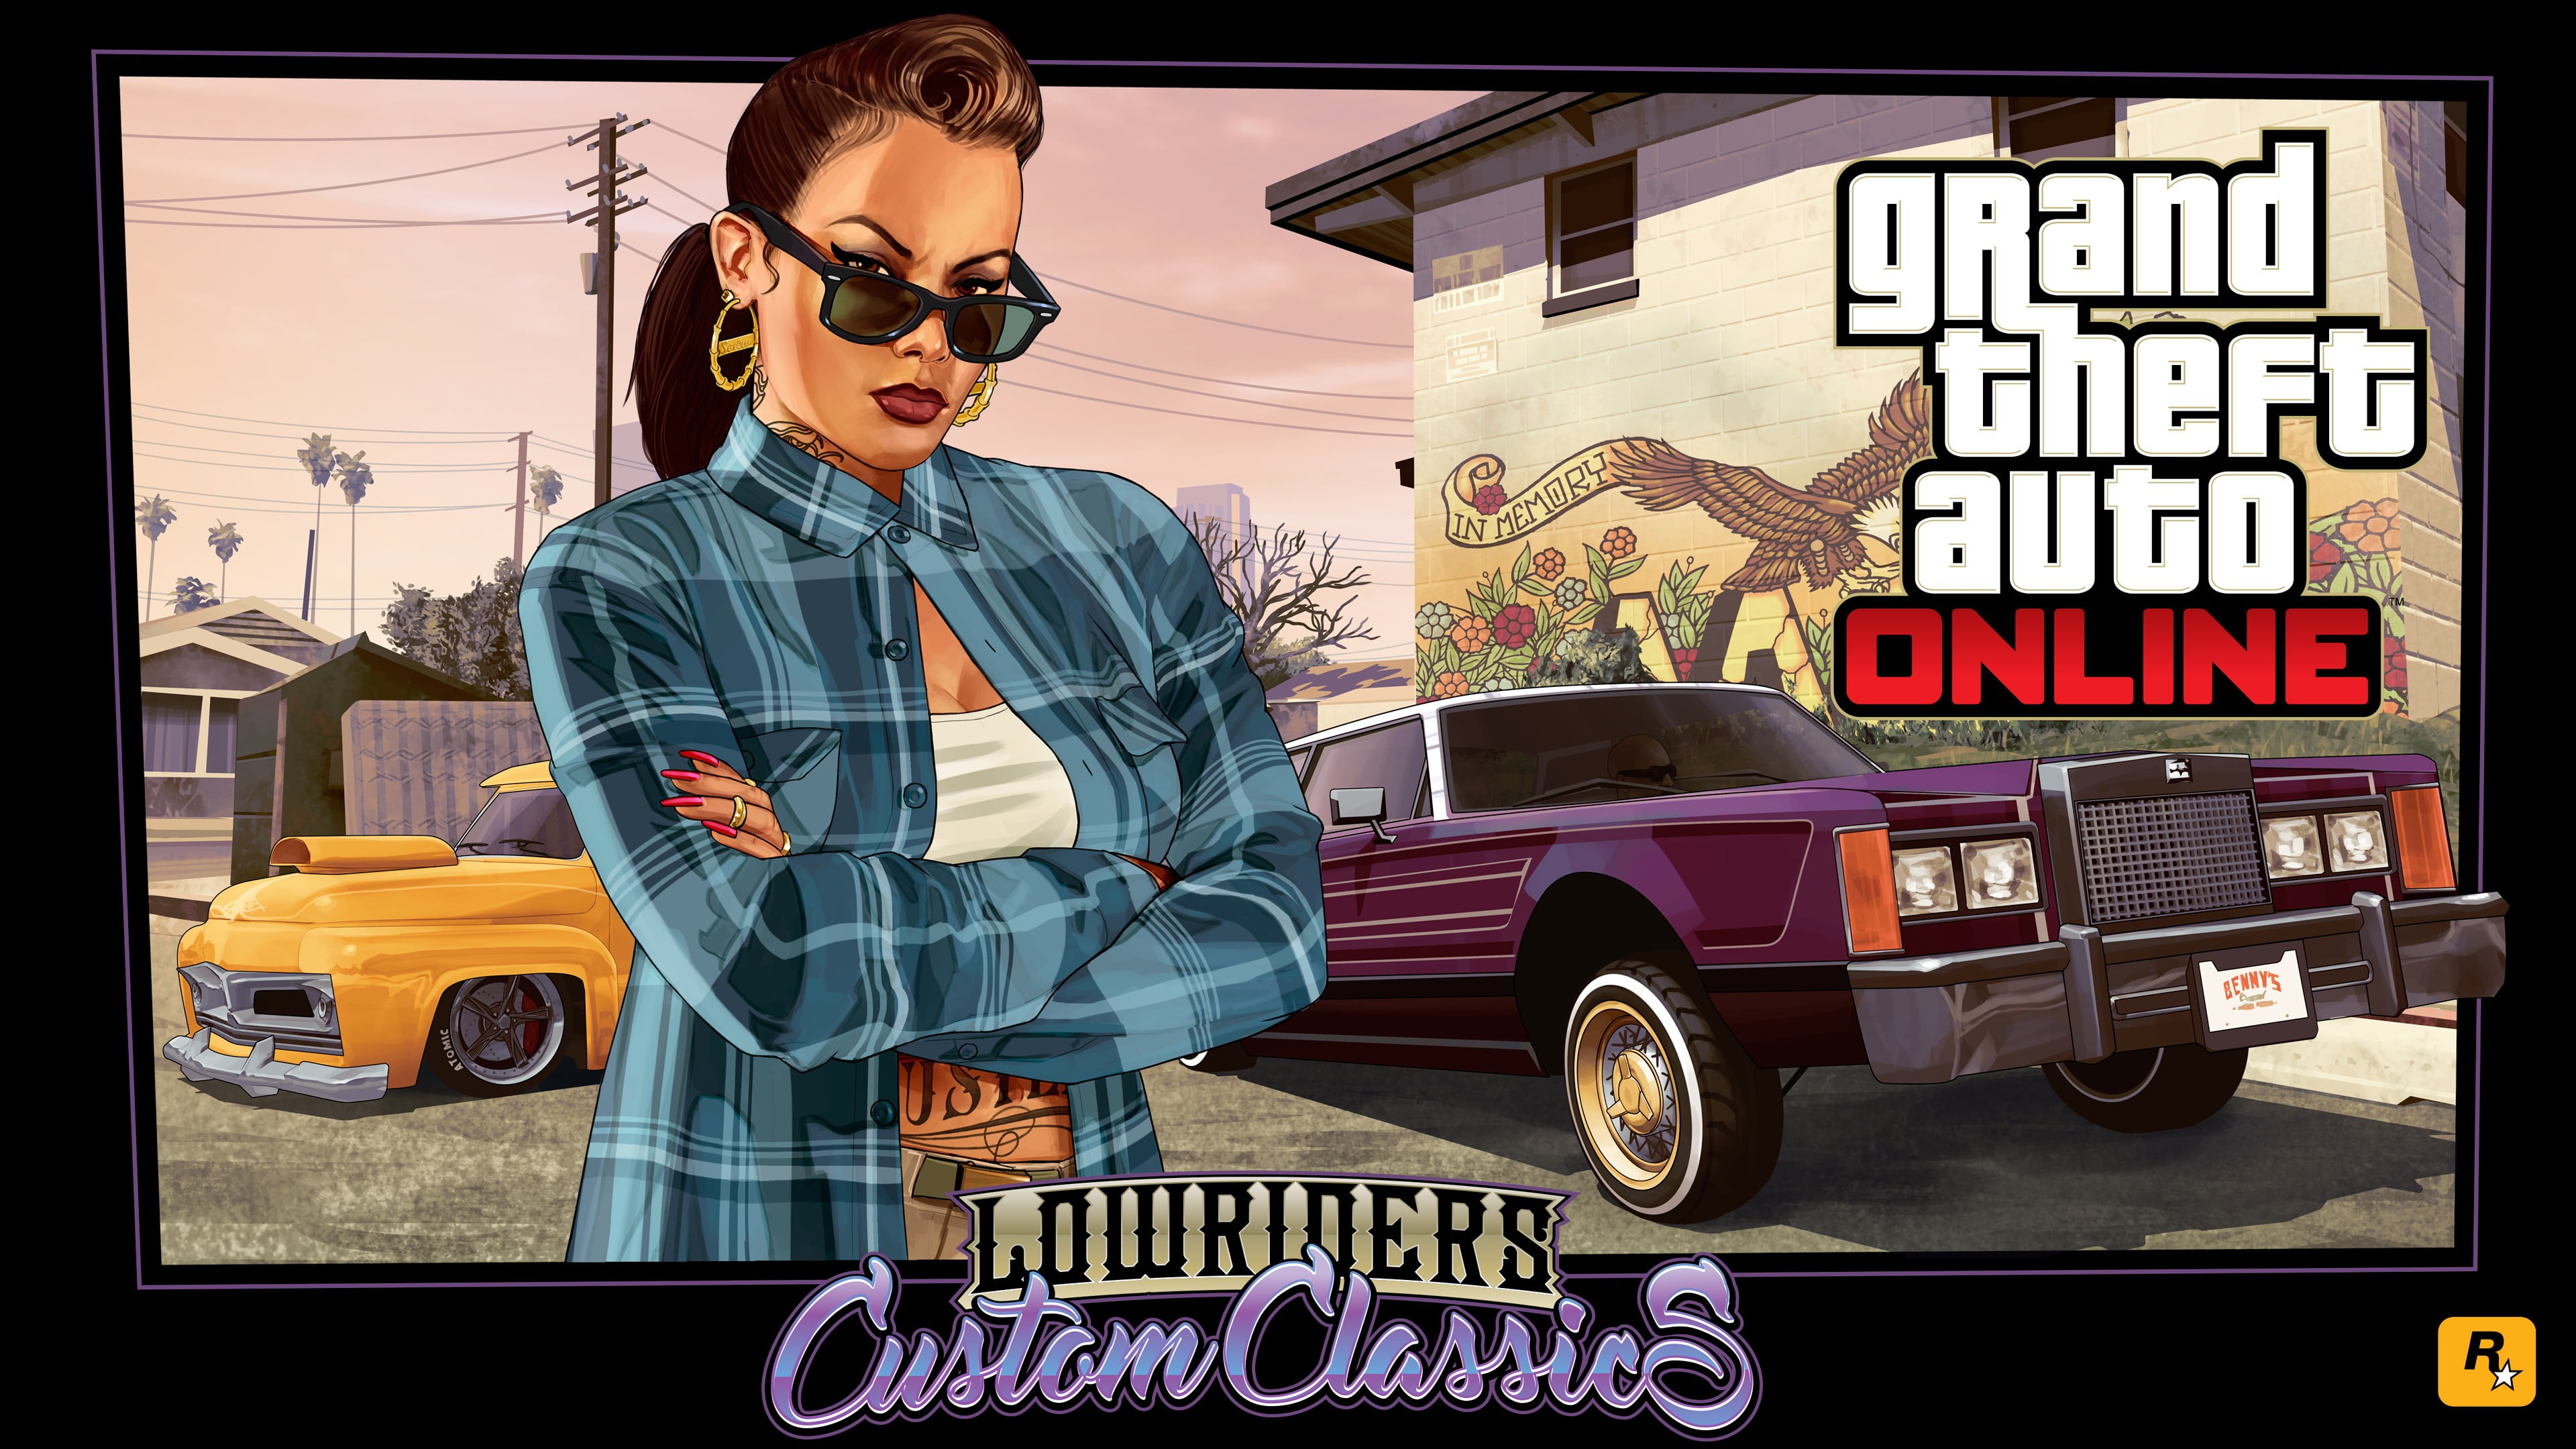 Grand Theft Auto Online wallpaper, Grand Theft Auto V Online, lowrider, Grand Theft Auto V, Rockstar Games